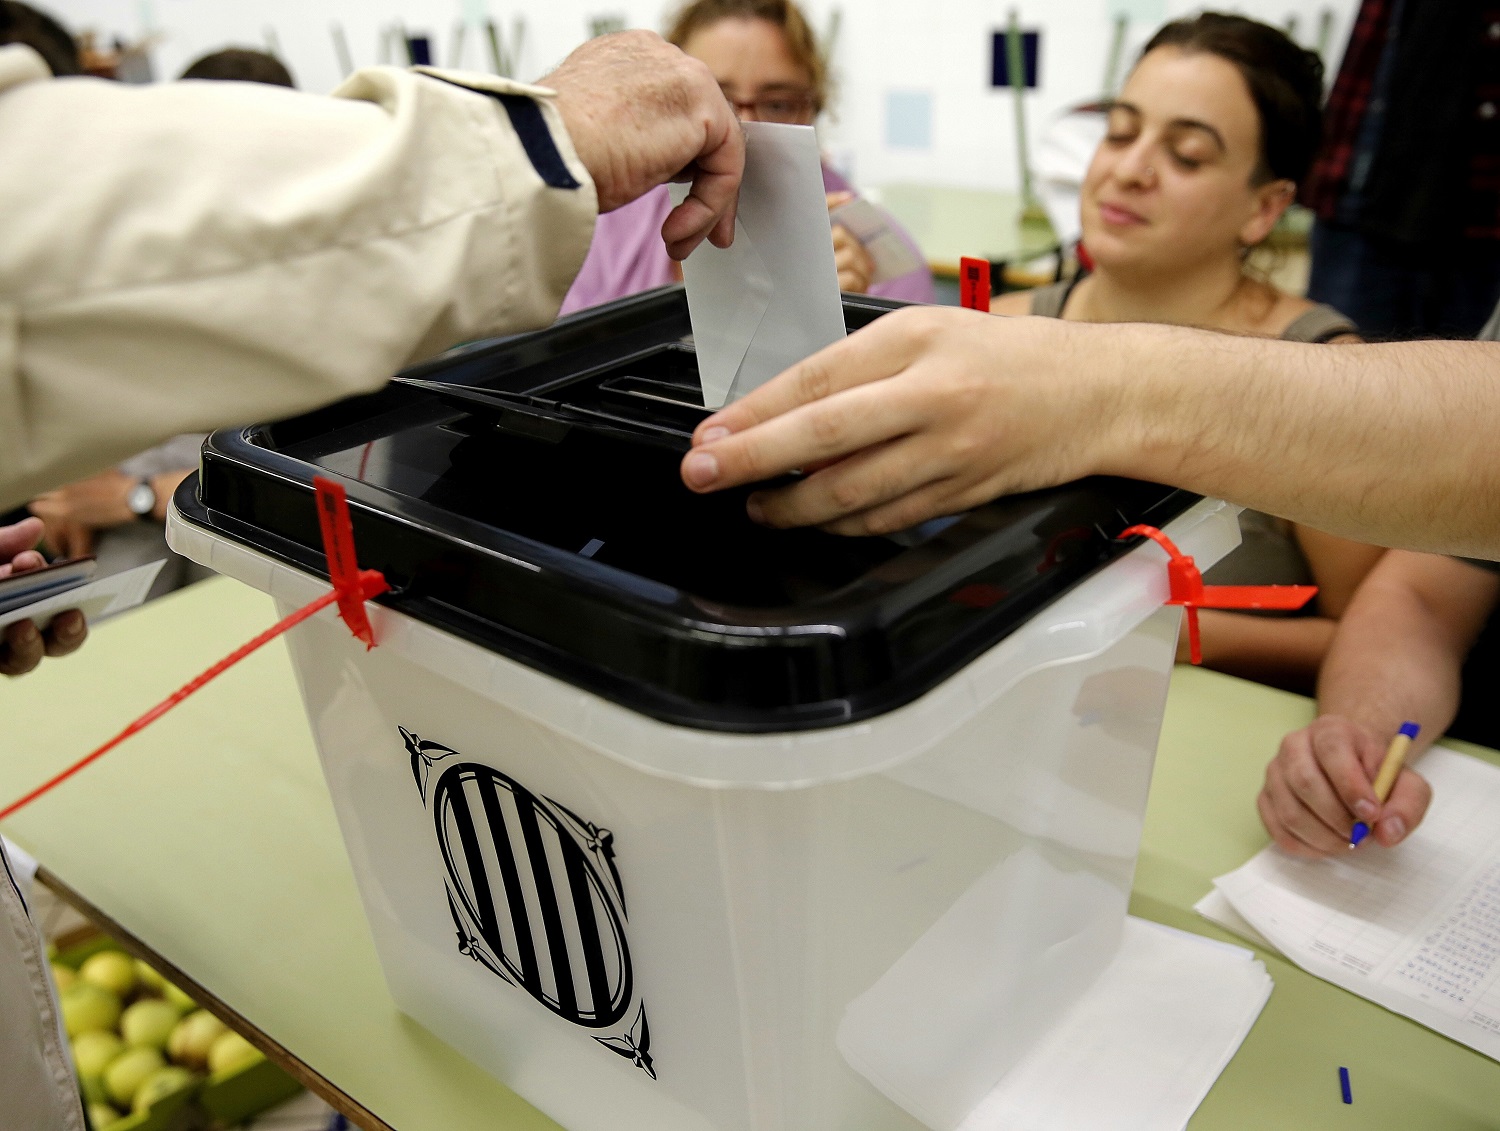 Cataluña vota en referéndum independentista a pesar del fuerte despliegue policial